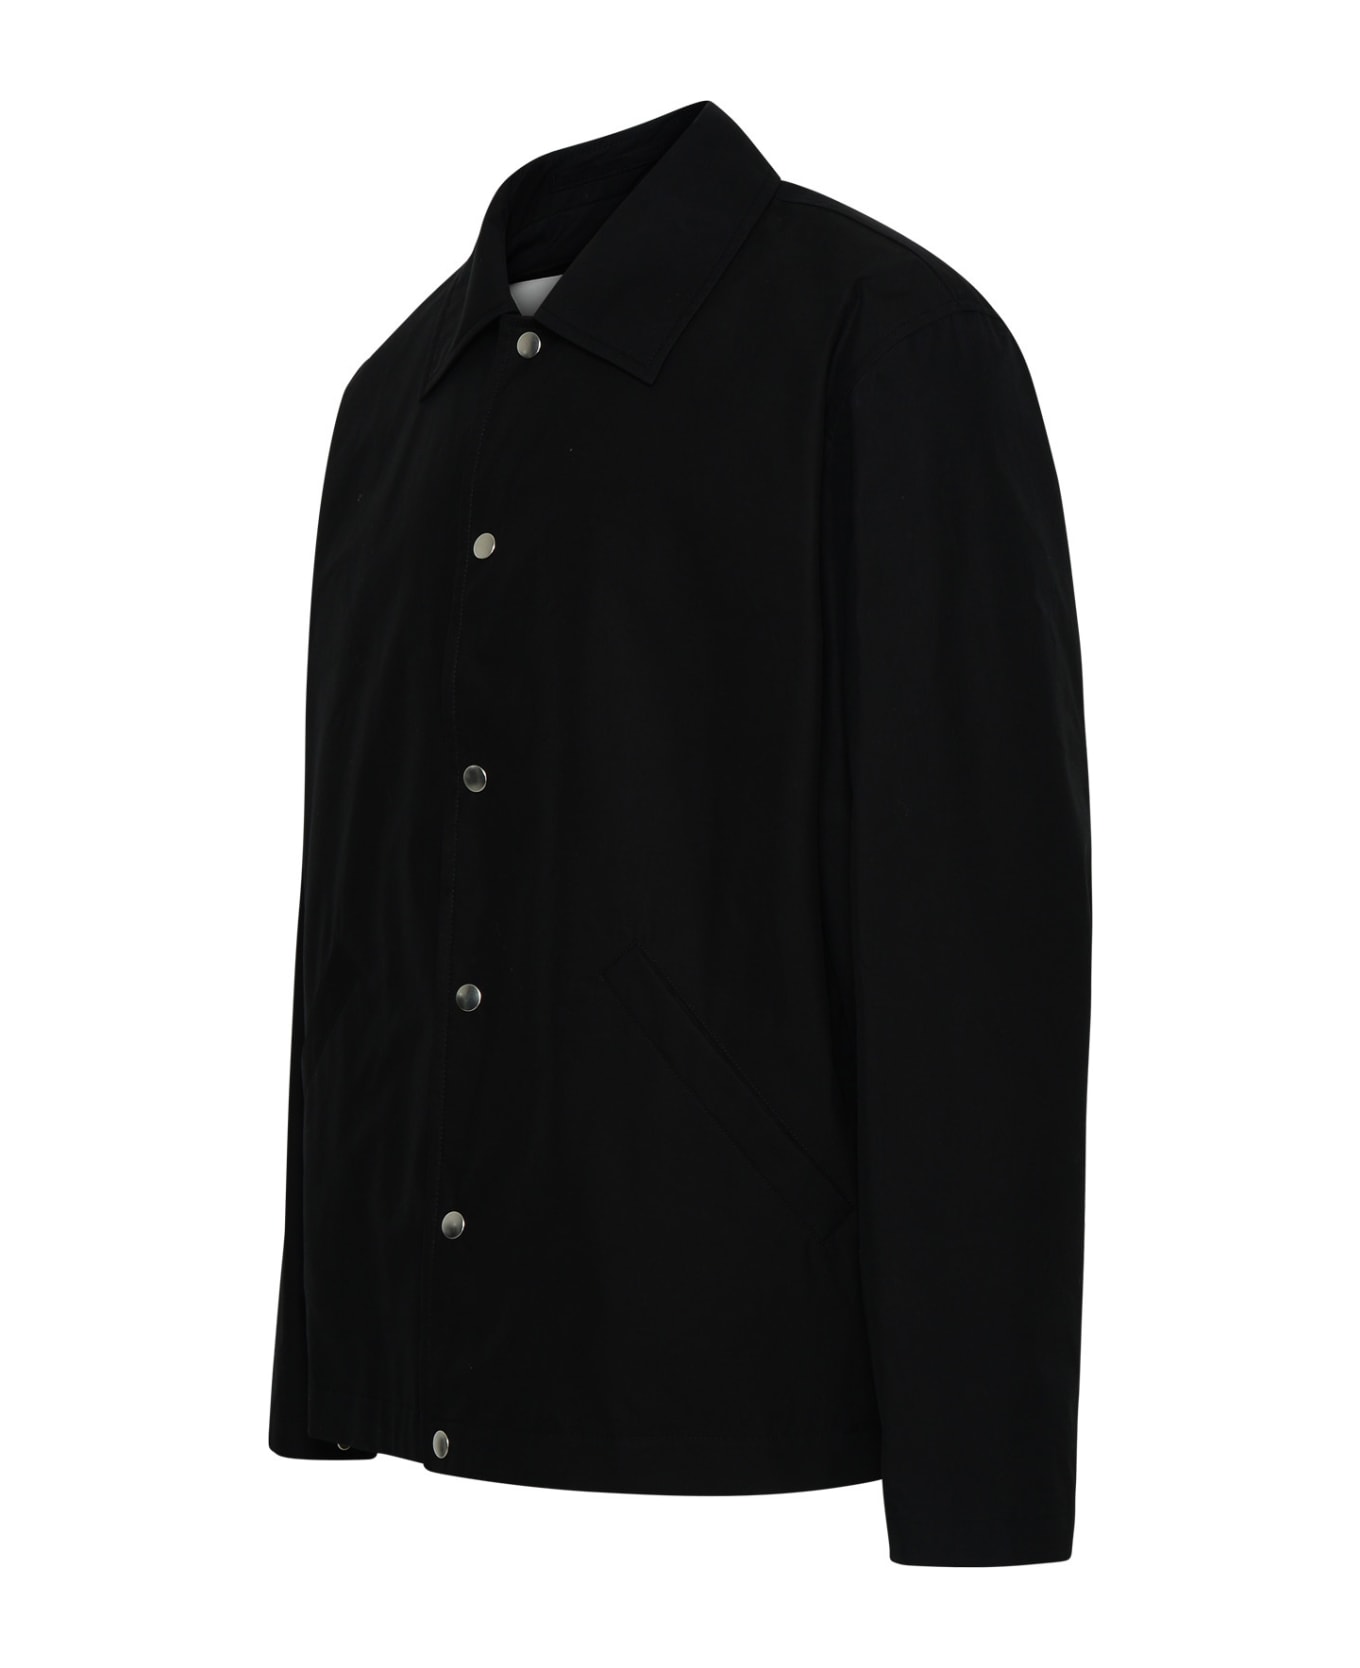 Jil Sander Black Cotton Jacket - Black